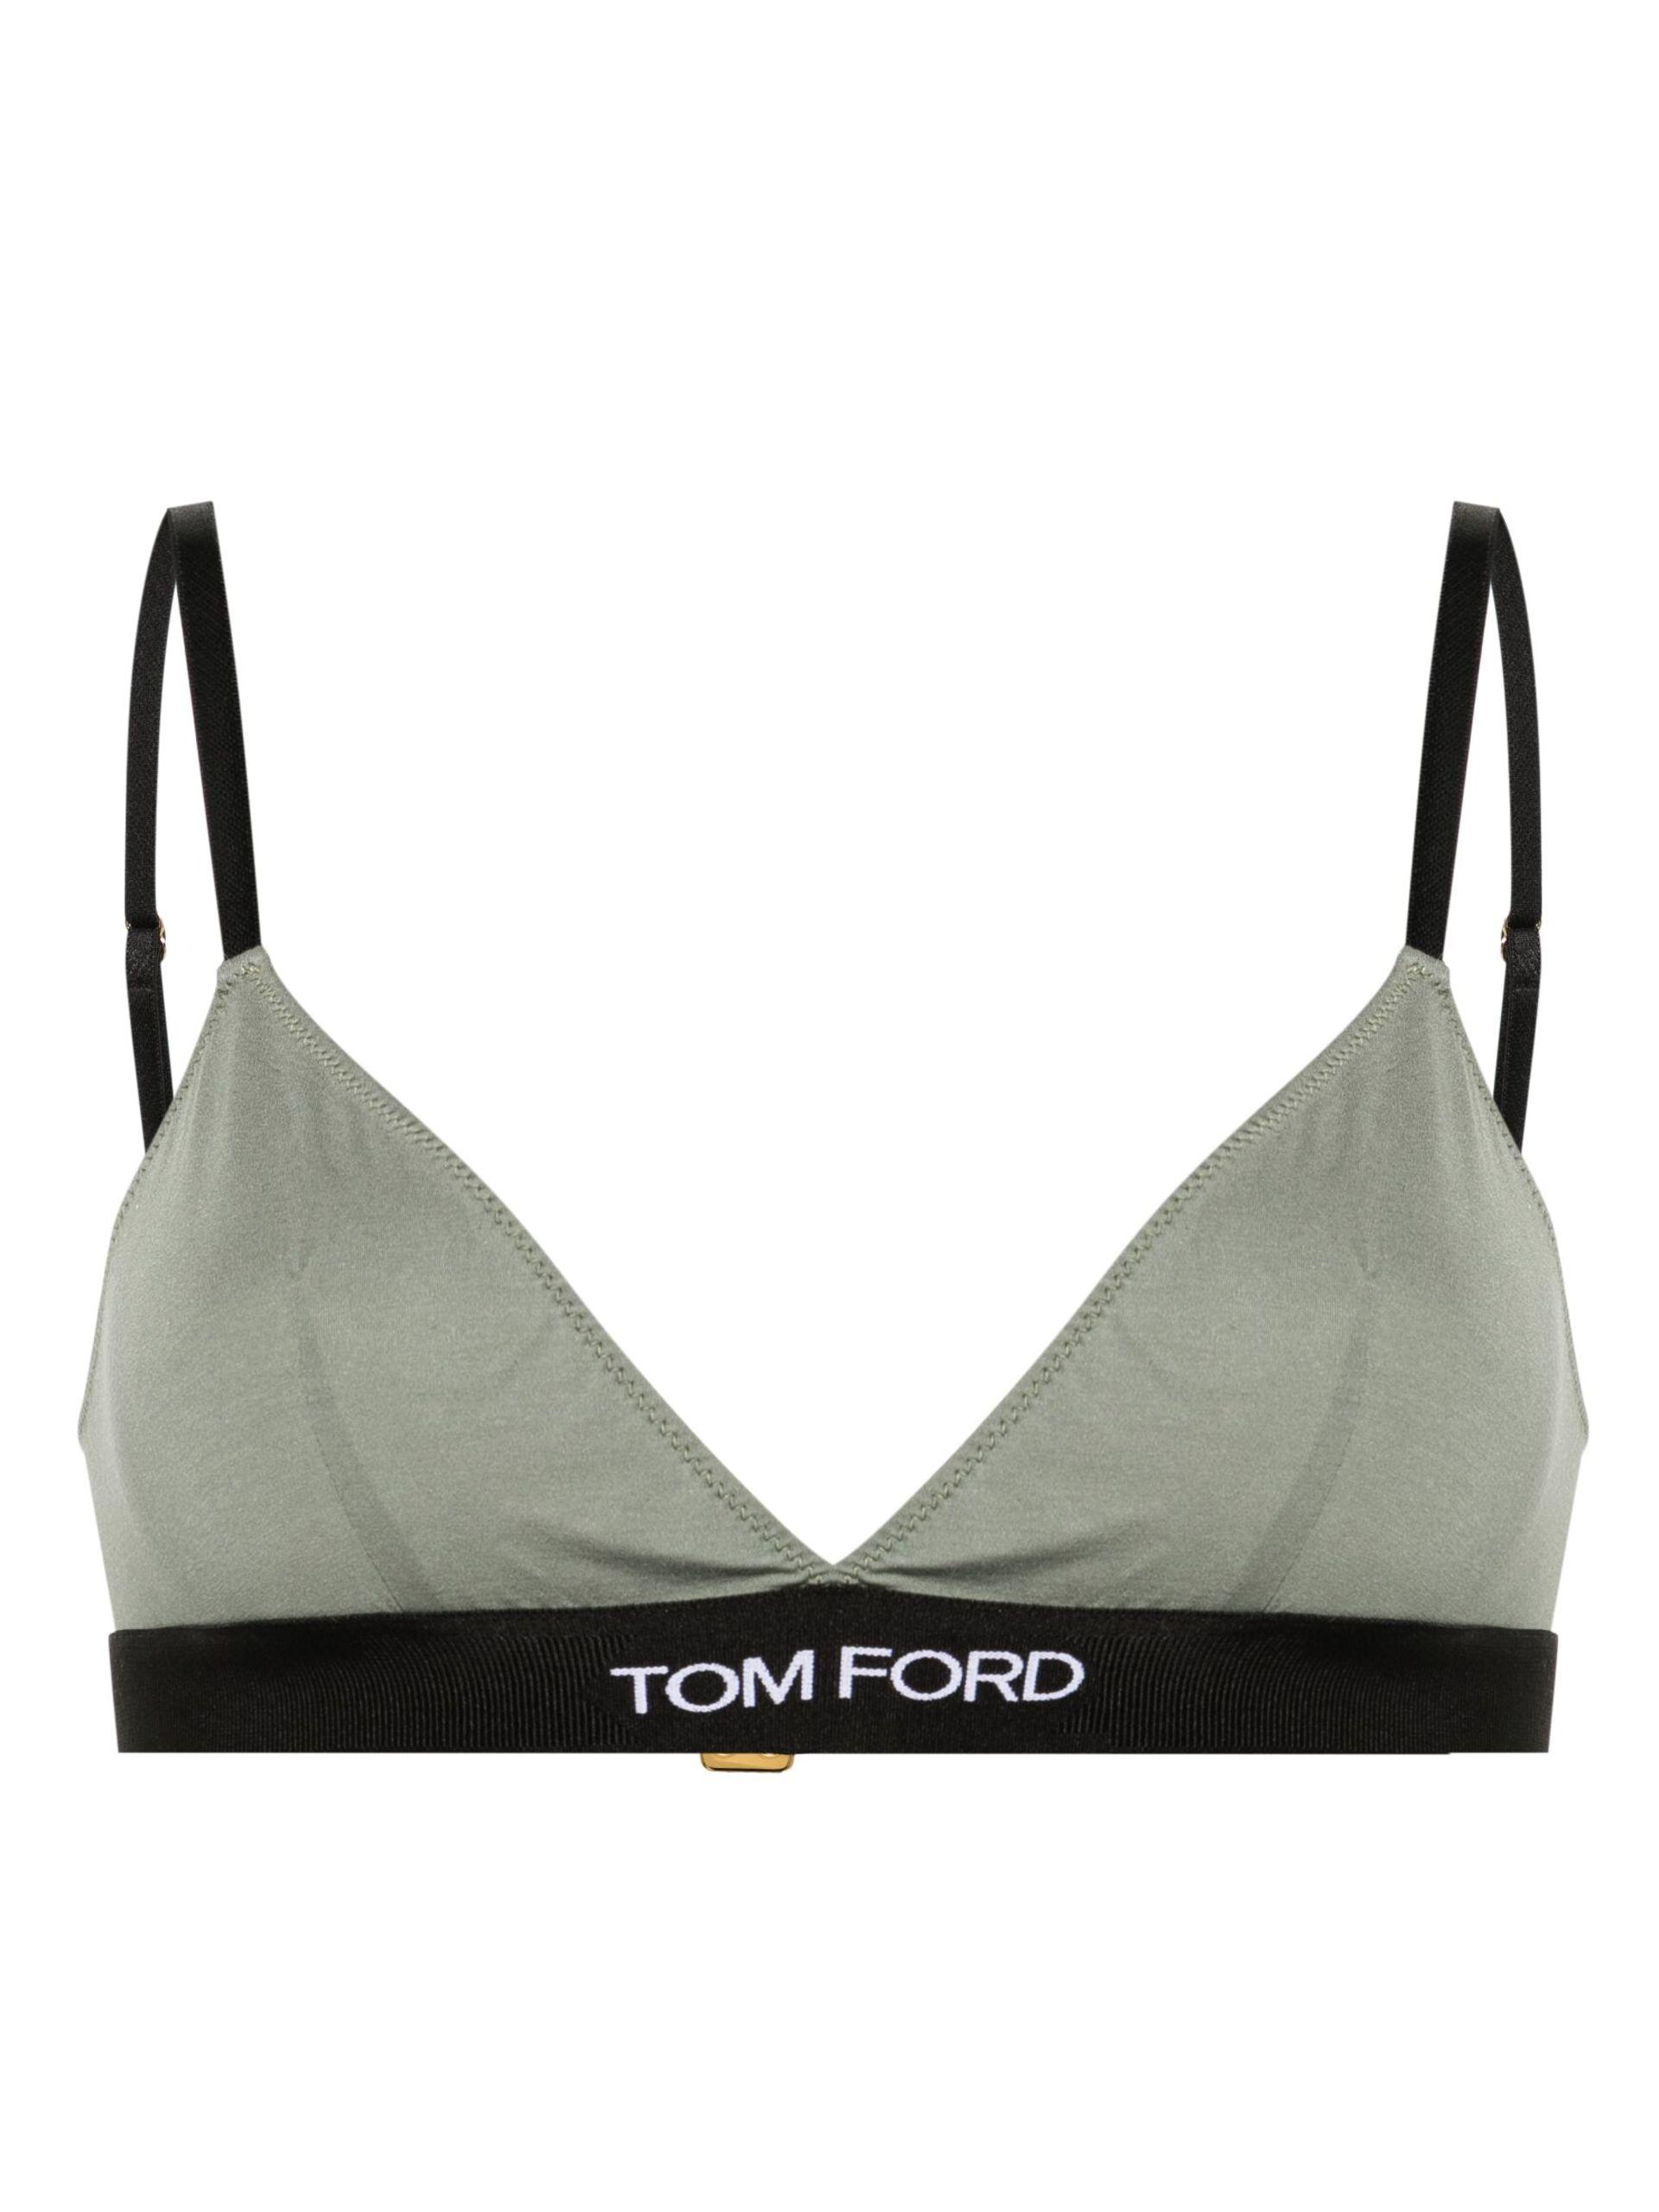 Tom Ford Signature Jersey Triangle Bra - Women's - Modal/elastane in Gray